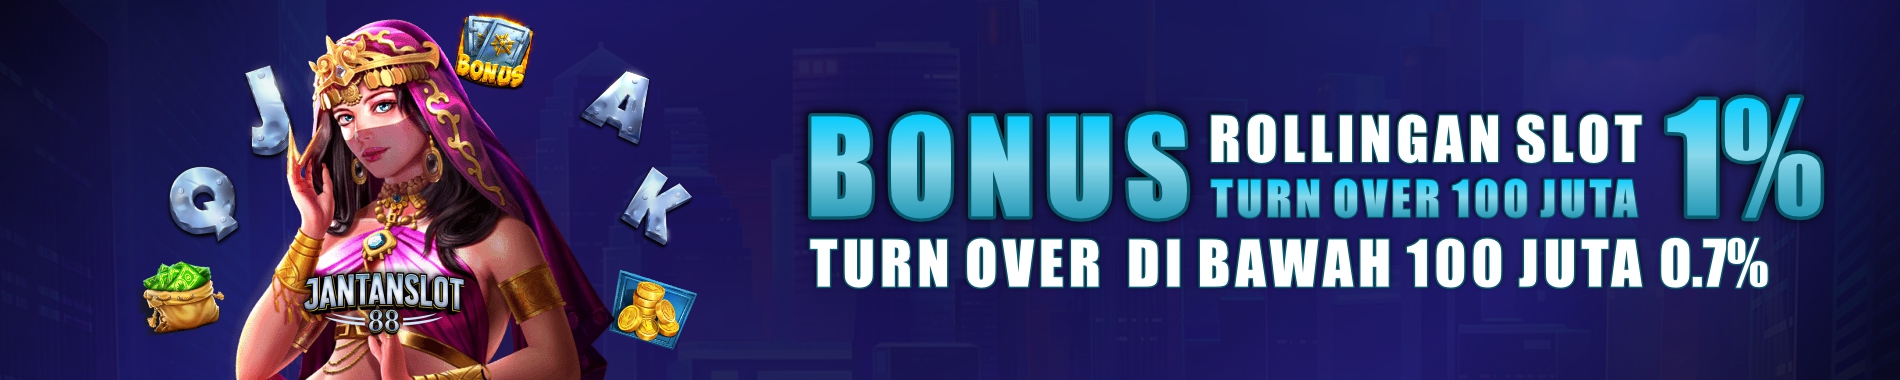 Bonus ROLLINGAN Slot